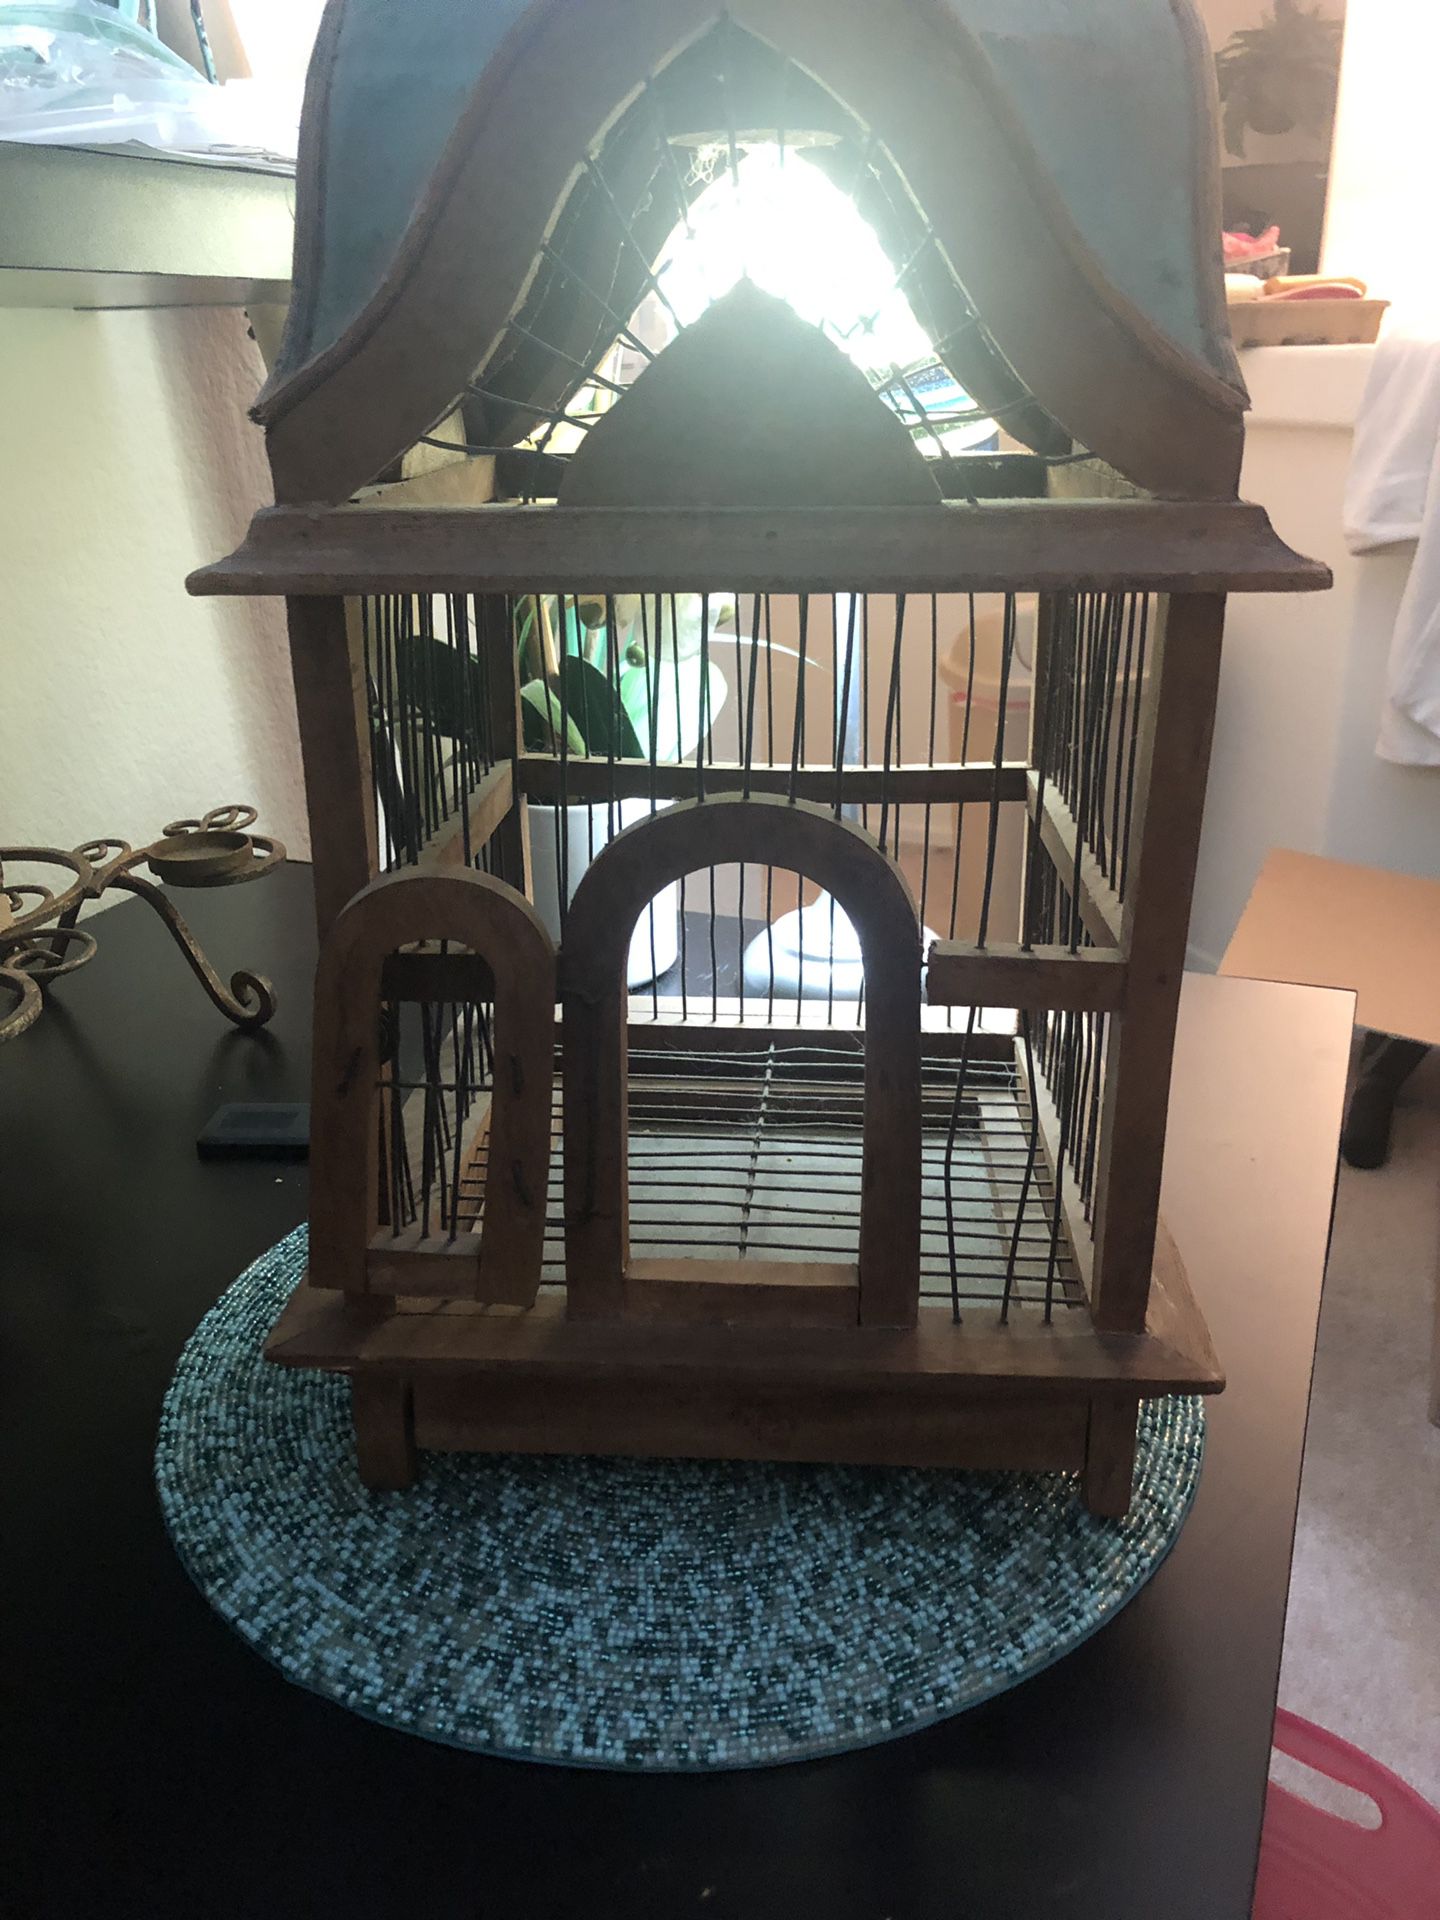 Bird cage decoration